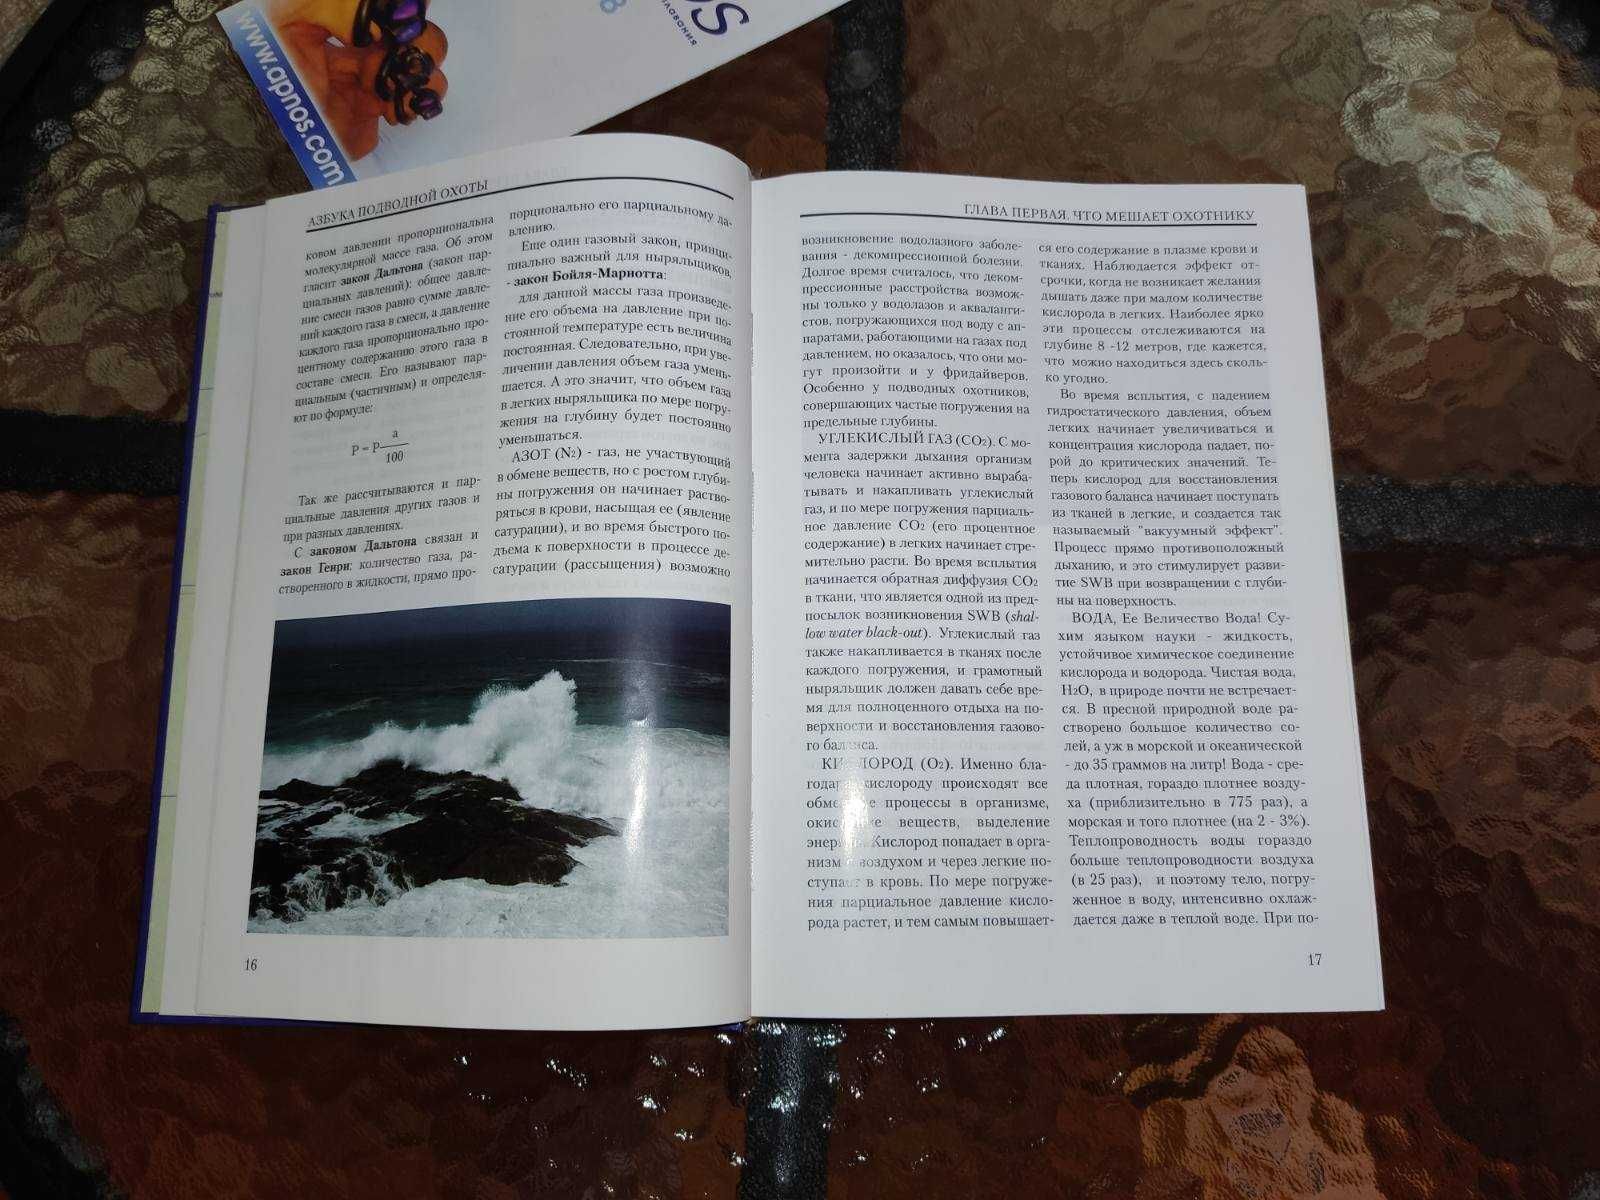 Книга Азбука подводной охоты Андрей Лагутин підводне полювання